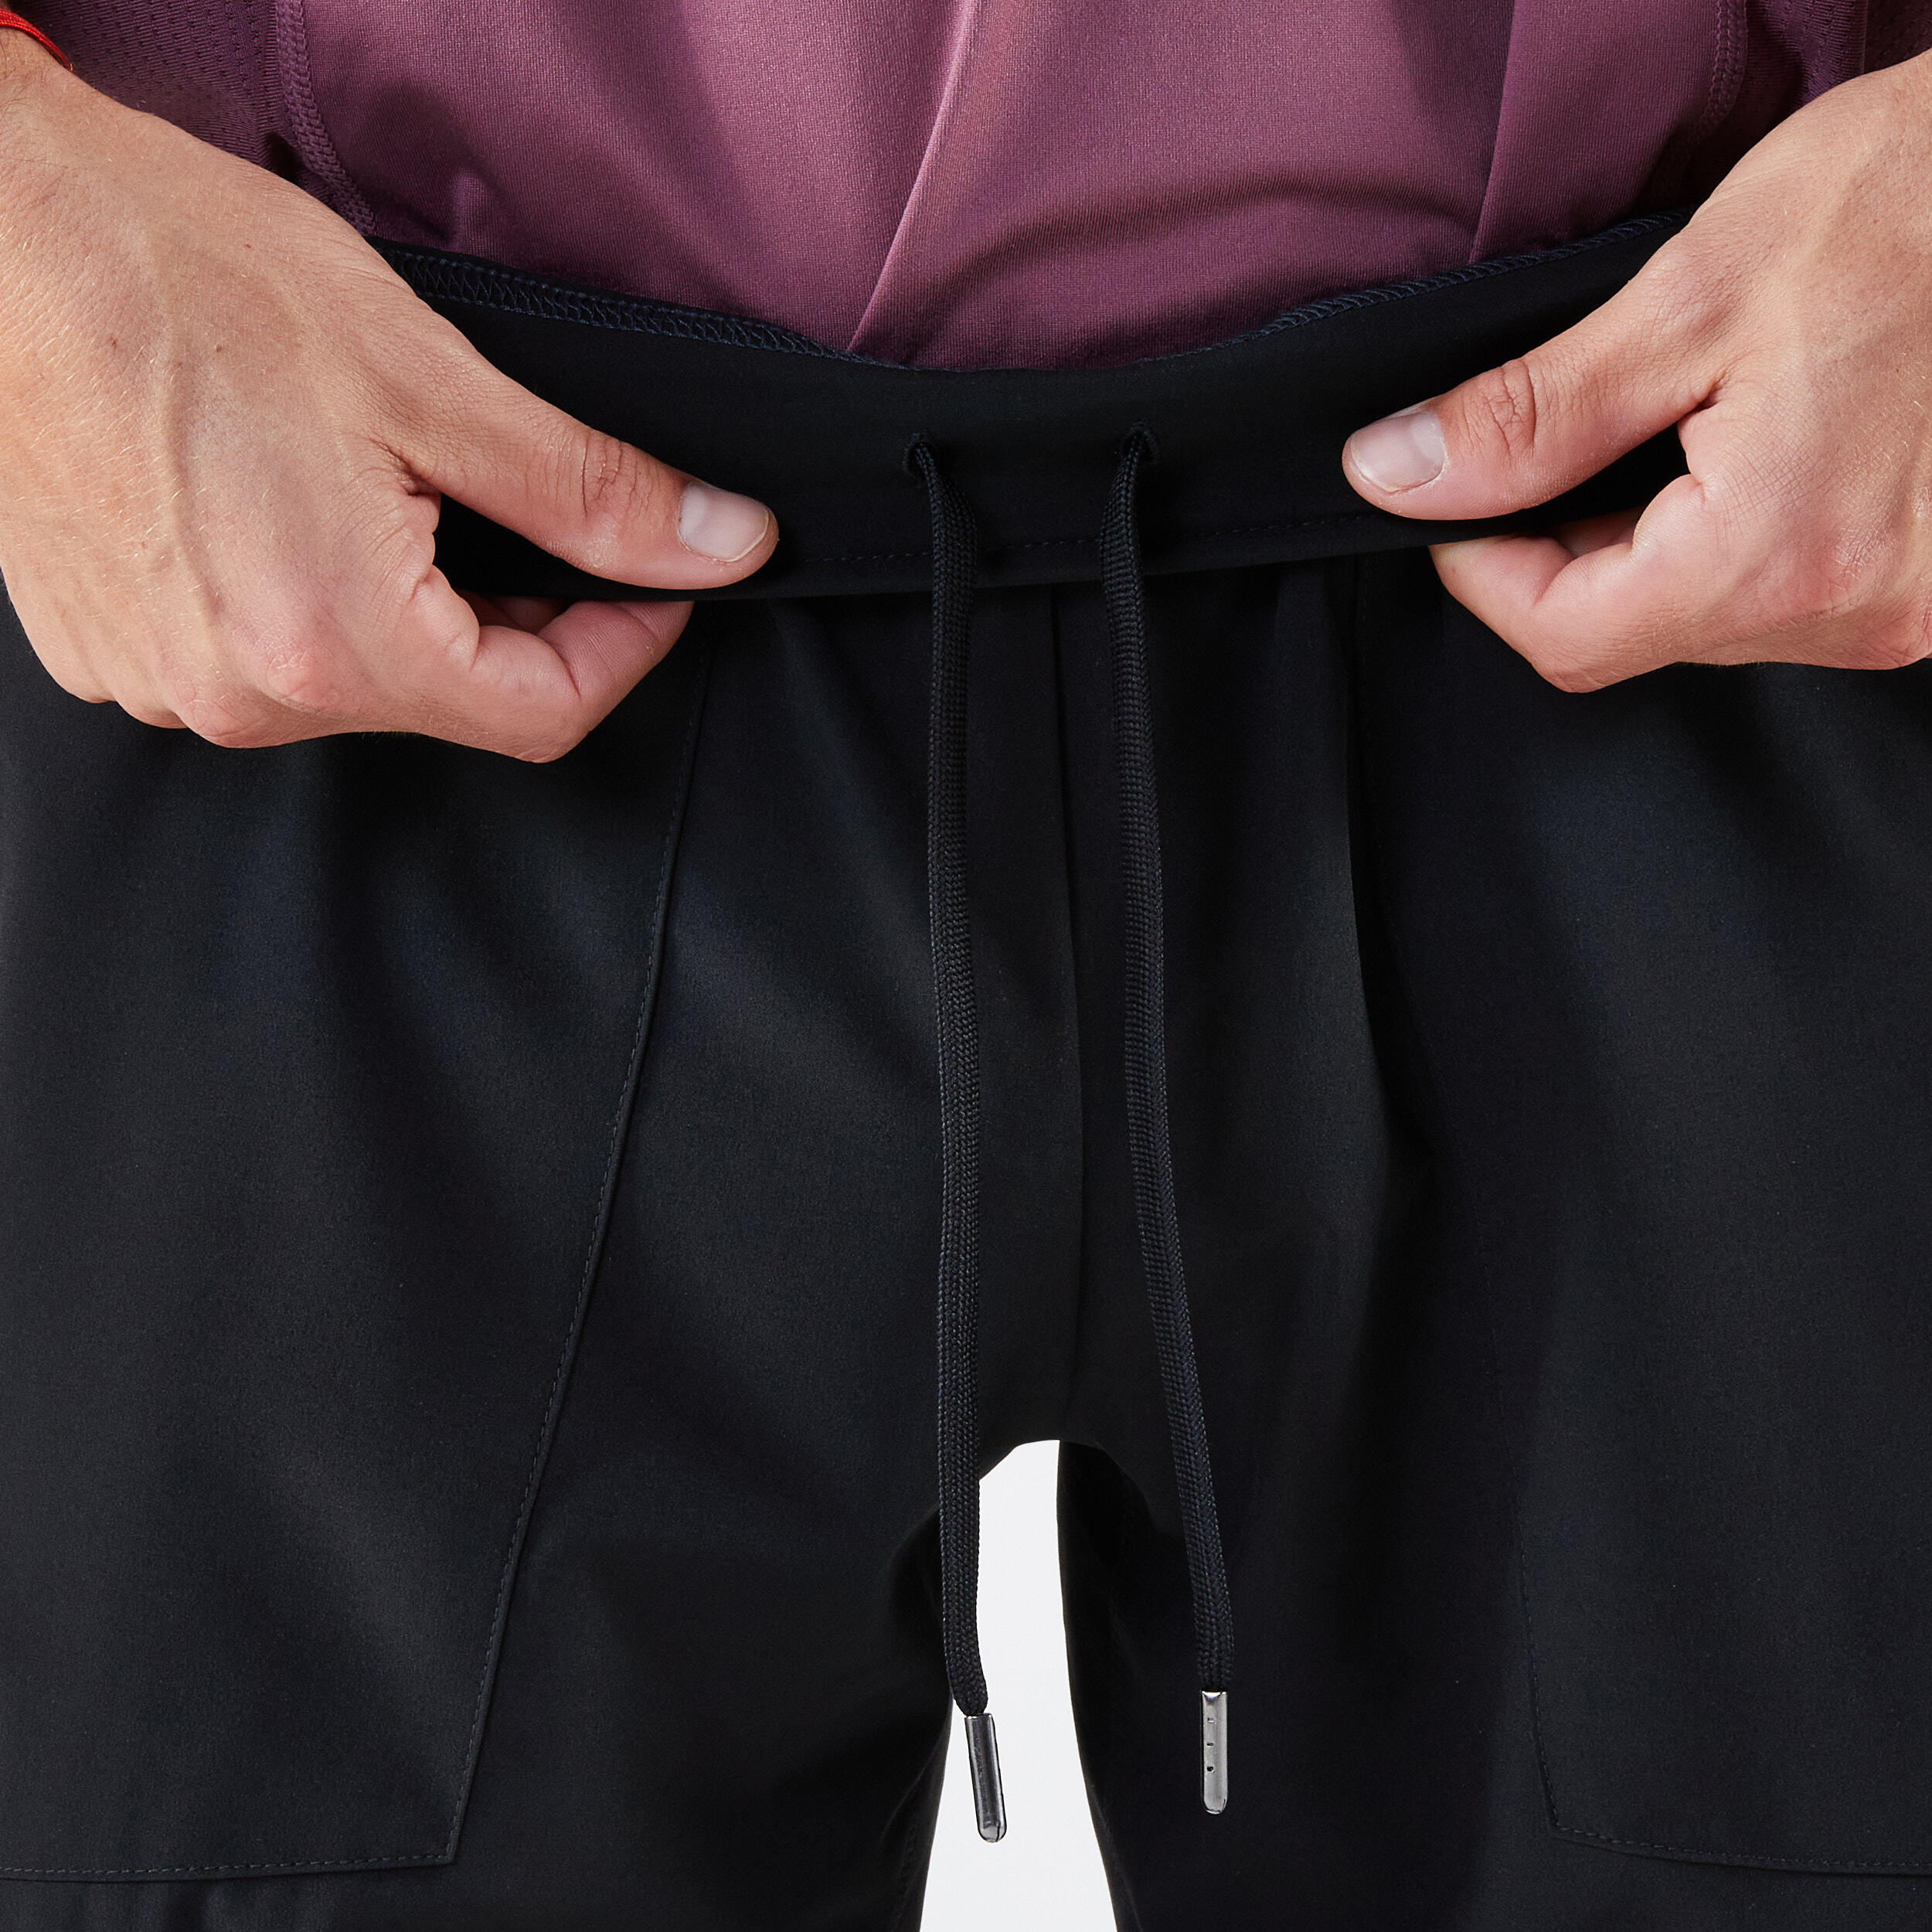 Men's Breathable Tennis Shorts Dry+ Gaël Monfils - Black 4/6